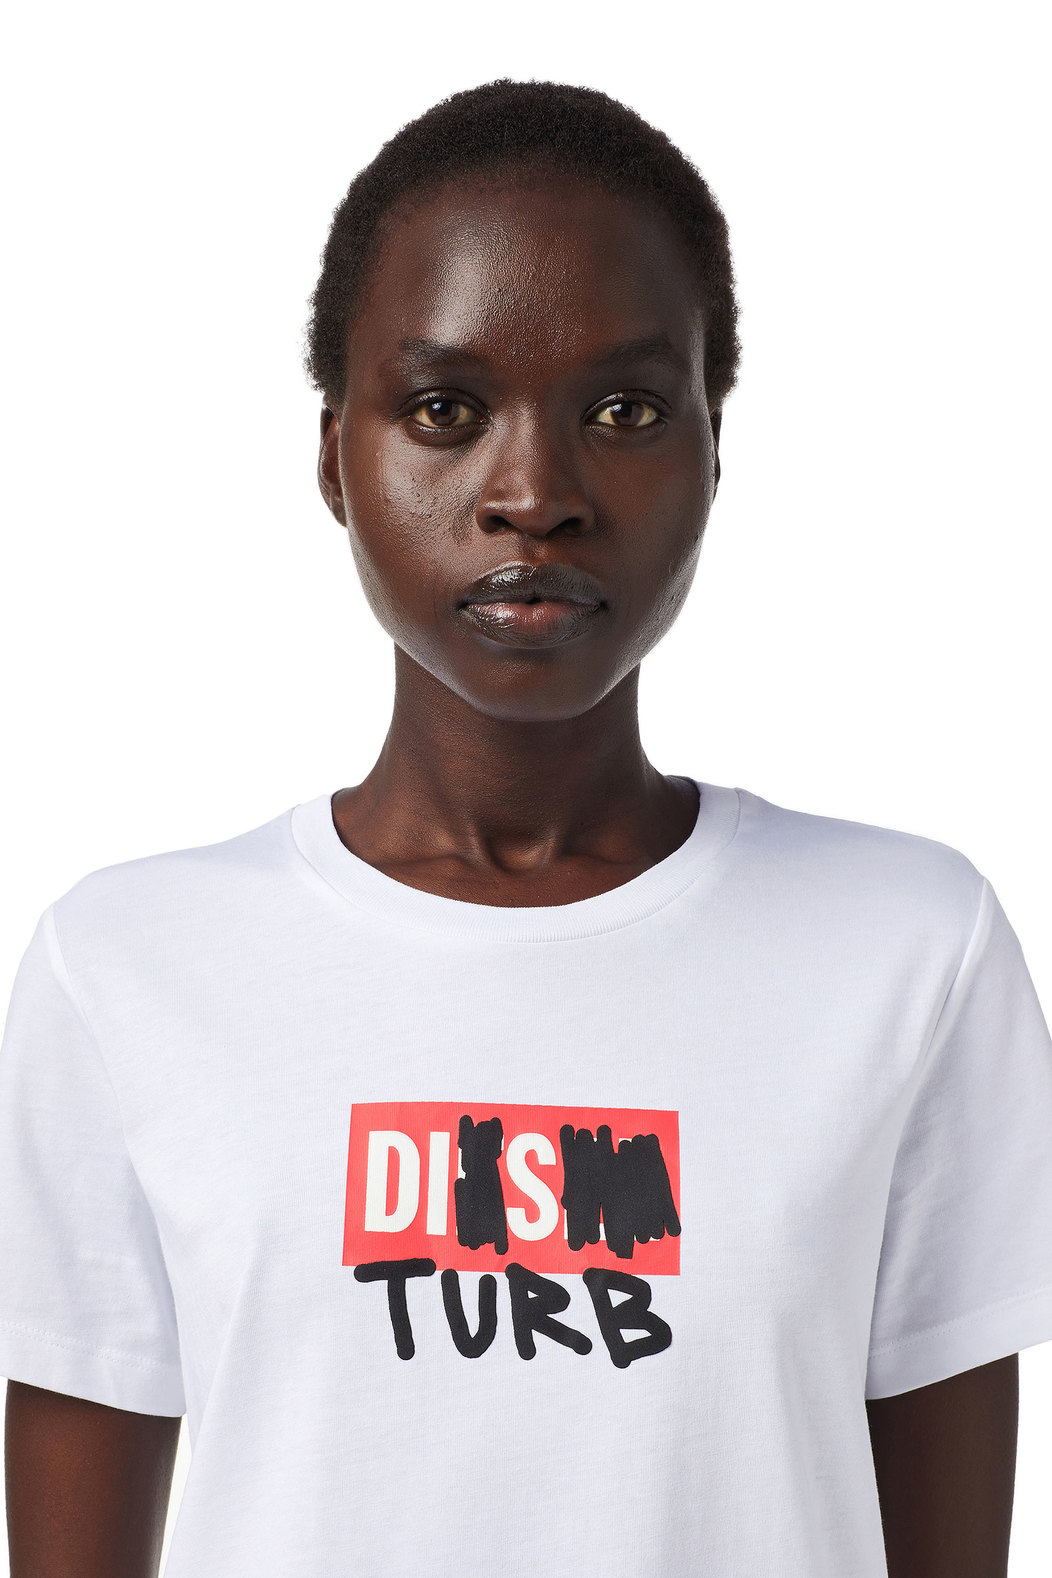 T-Shirt With Disturb Logo